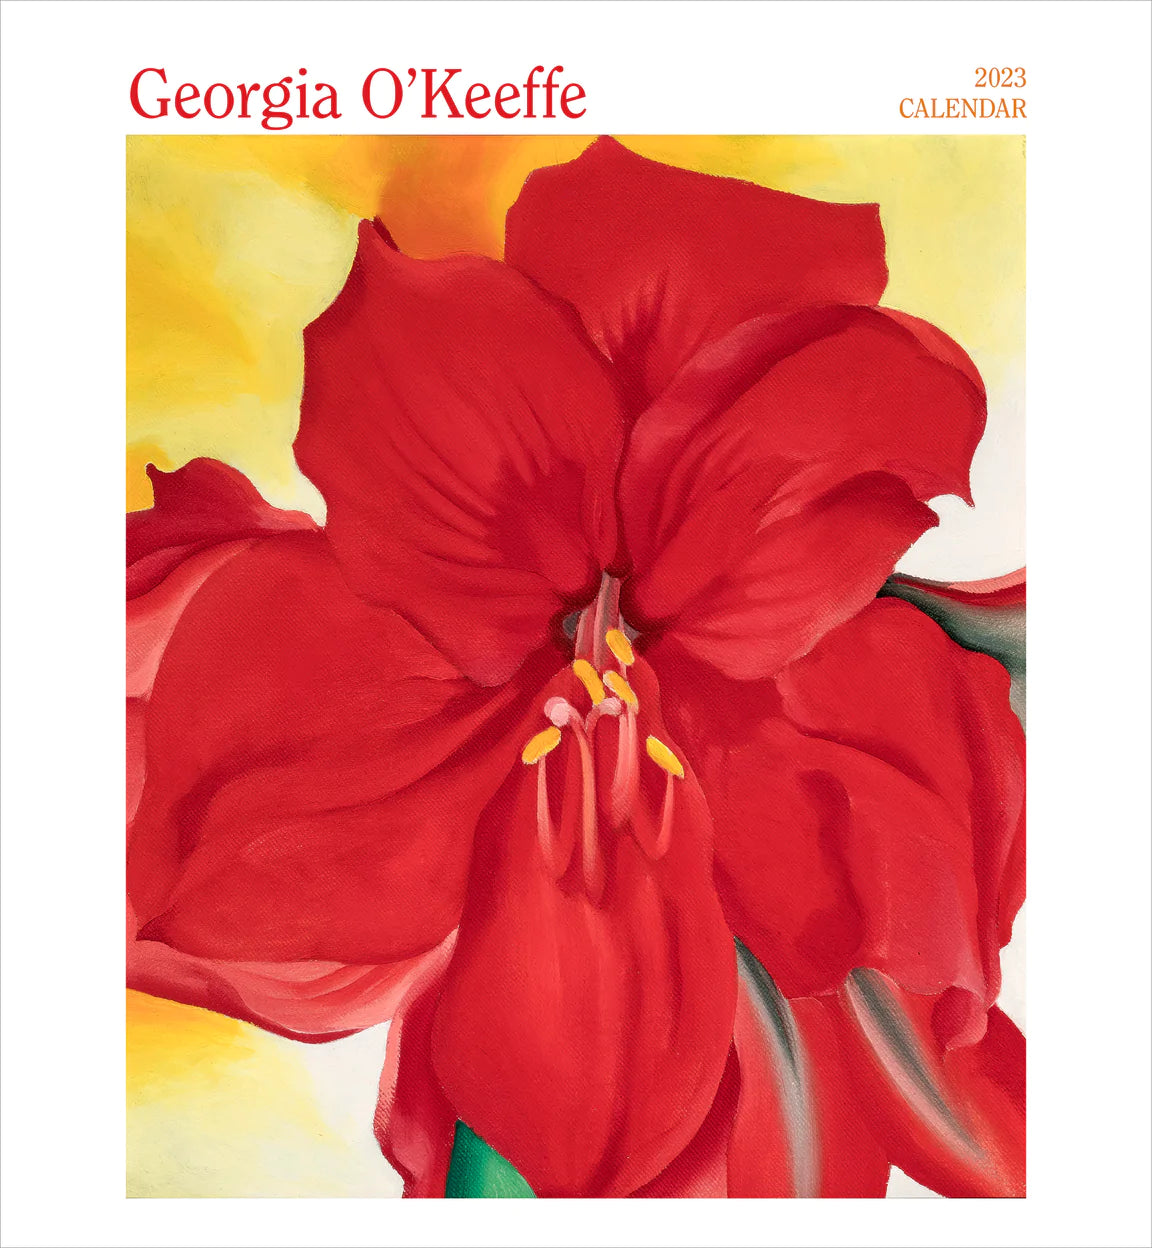 Georgia O'Keeffe 2023 Wall Calendar